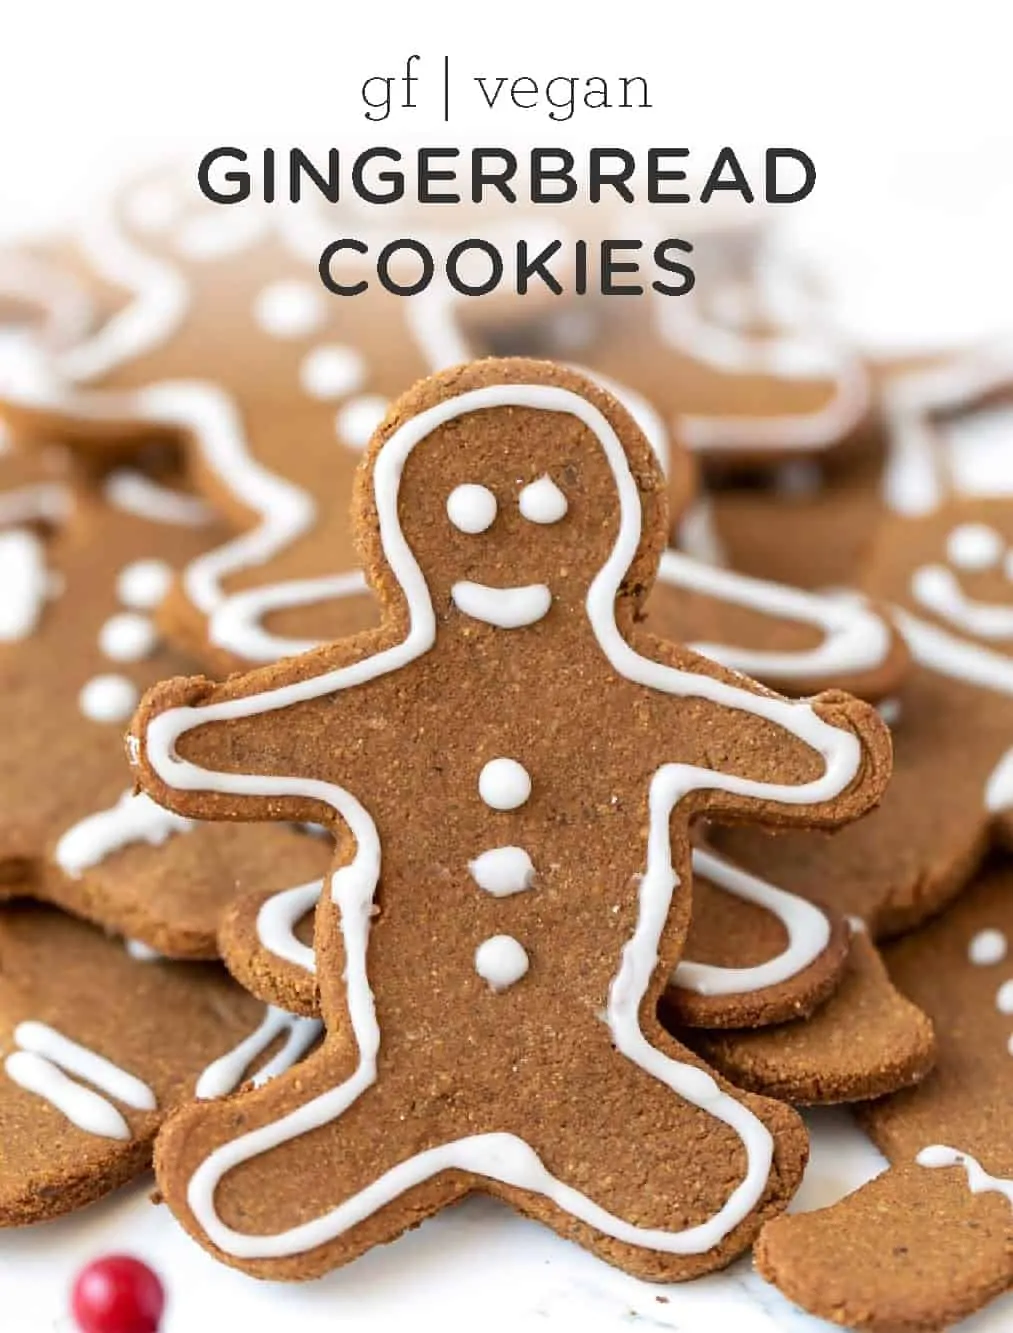 Gluten-Free and Vegan Gingerbread Cookies